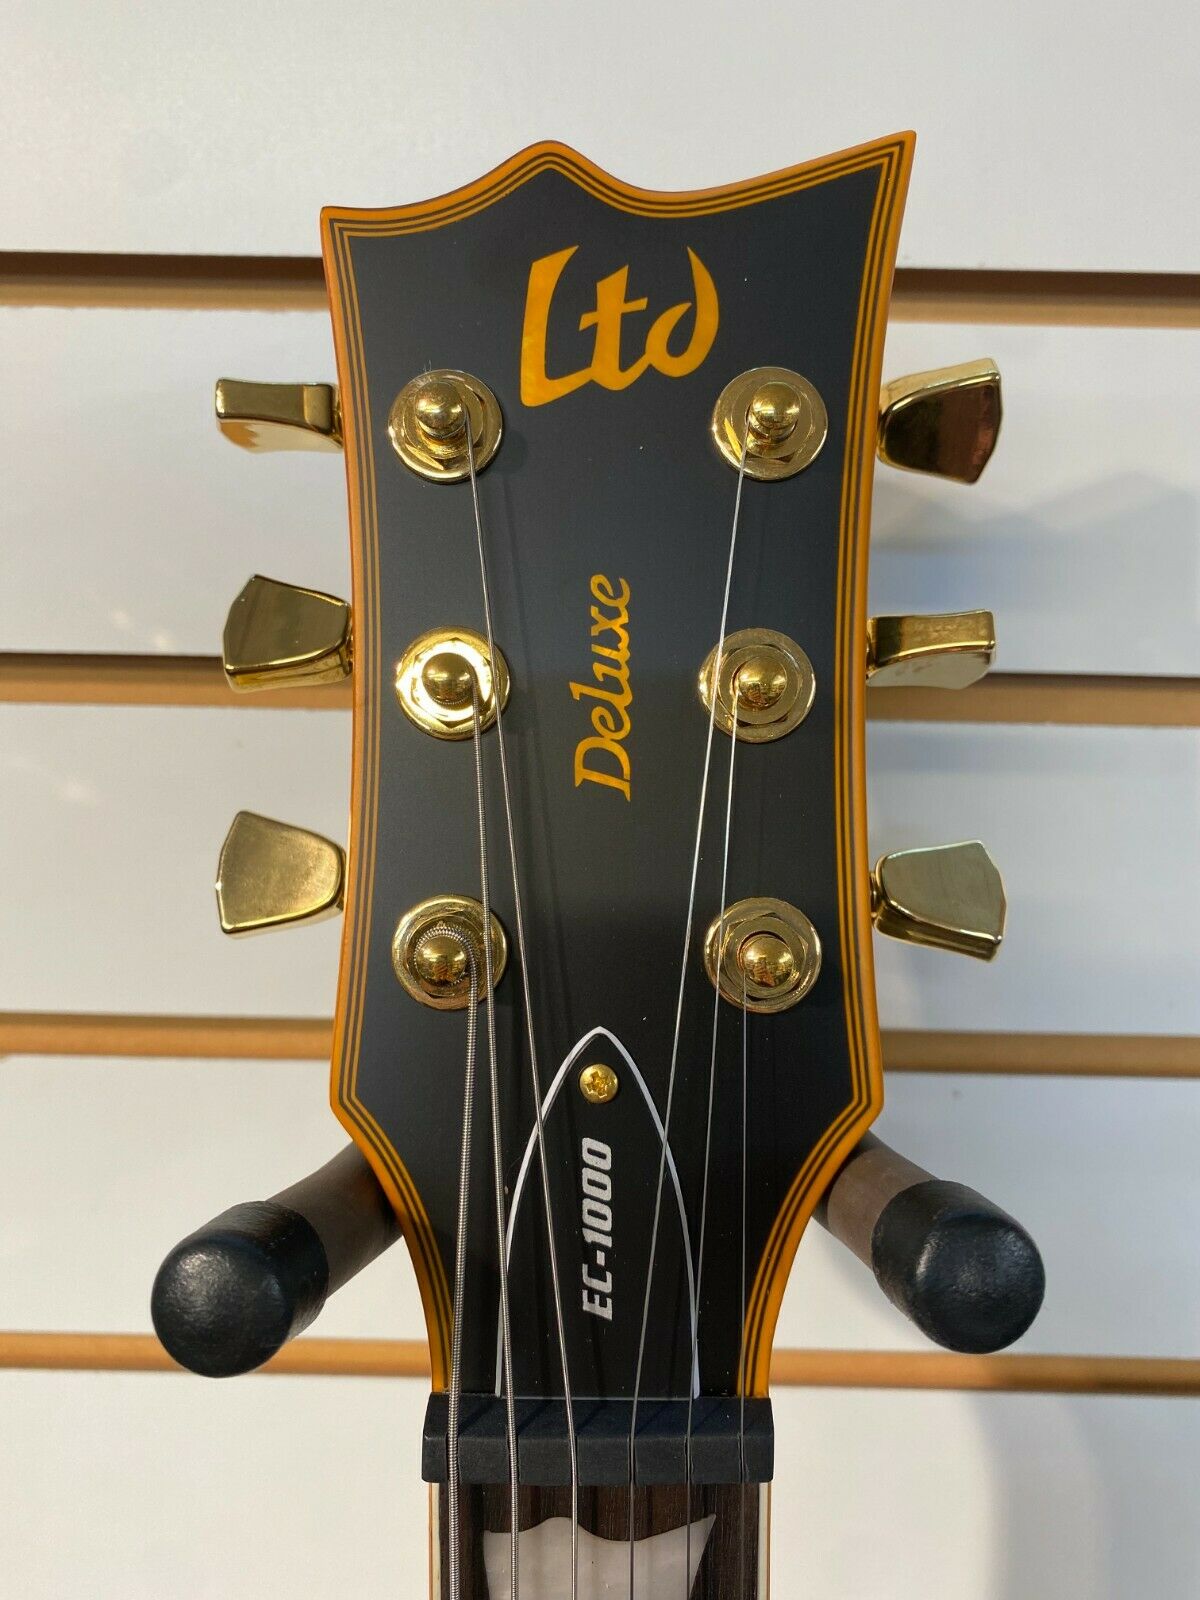 ESP/LTD EC-1000 Deluxe Electric Guitar - Vintage Black